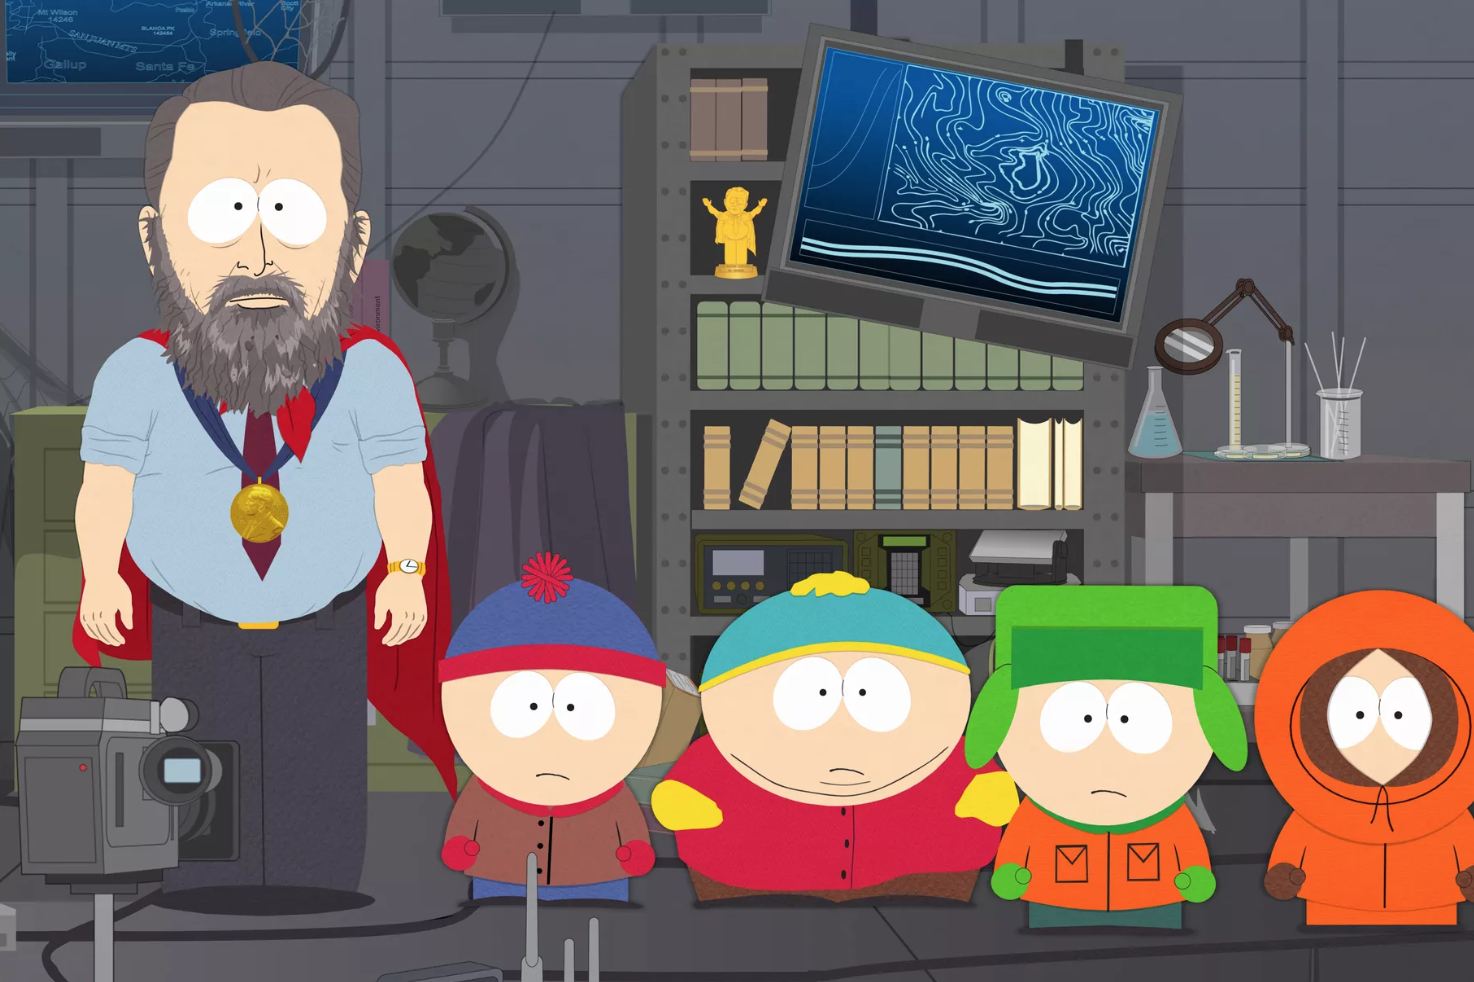 South Park For Its Climate Change Al Gore Joke When ManBearPig Returns Season 22 Episode 7